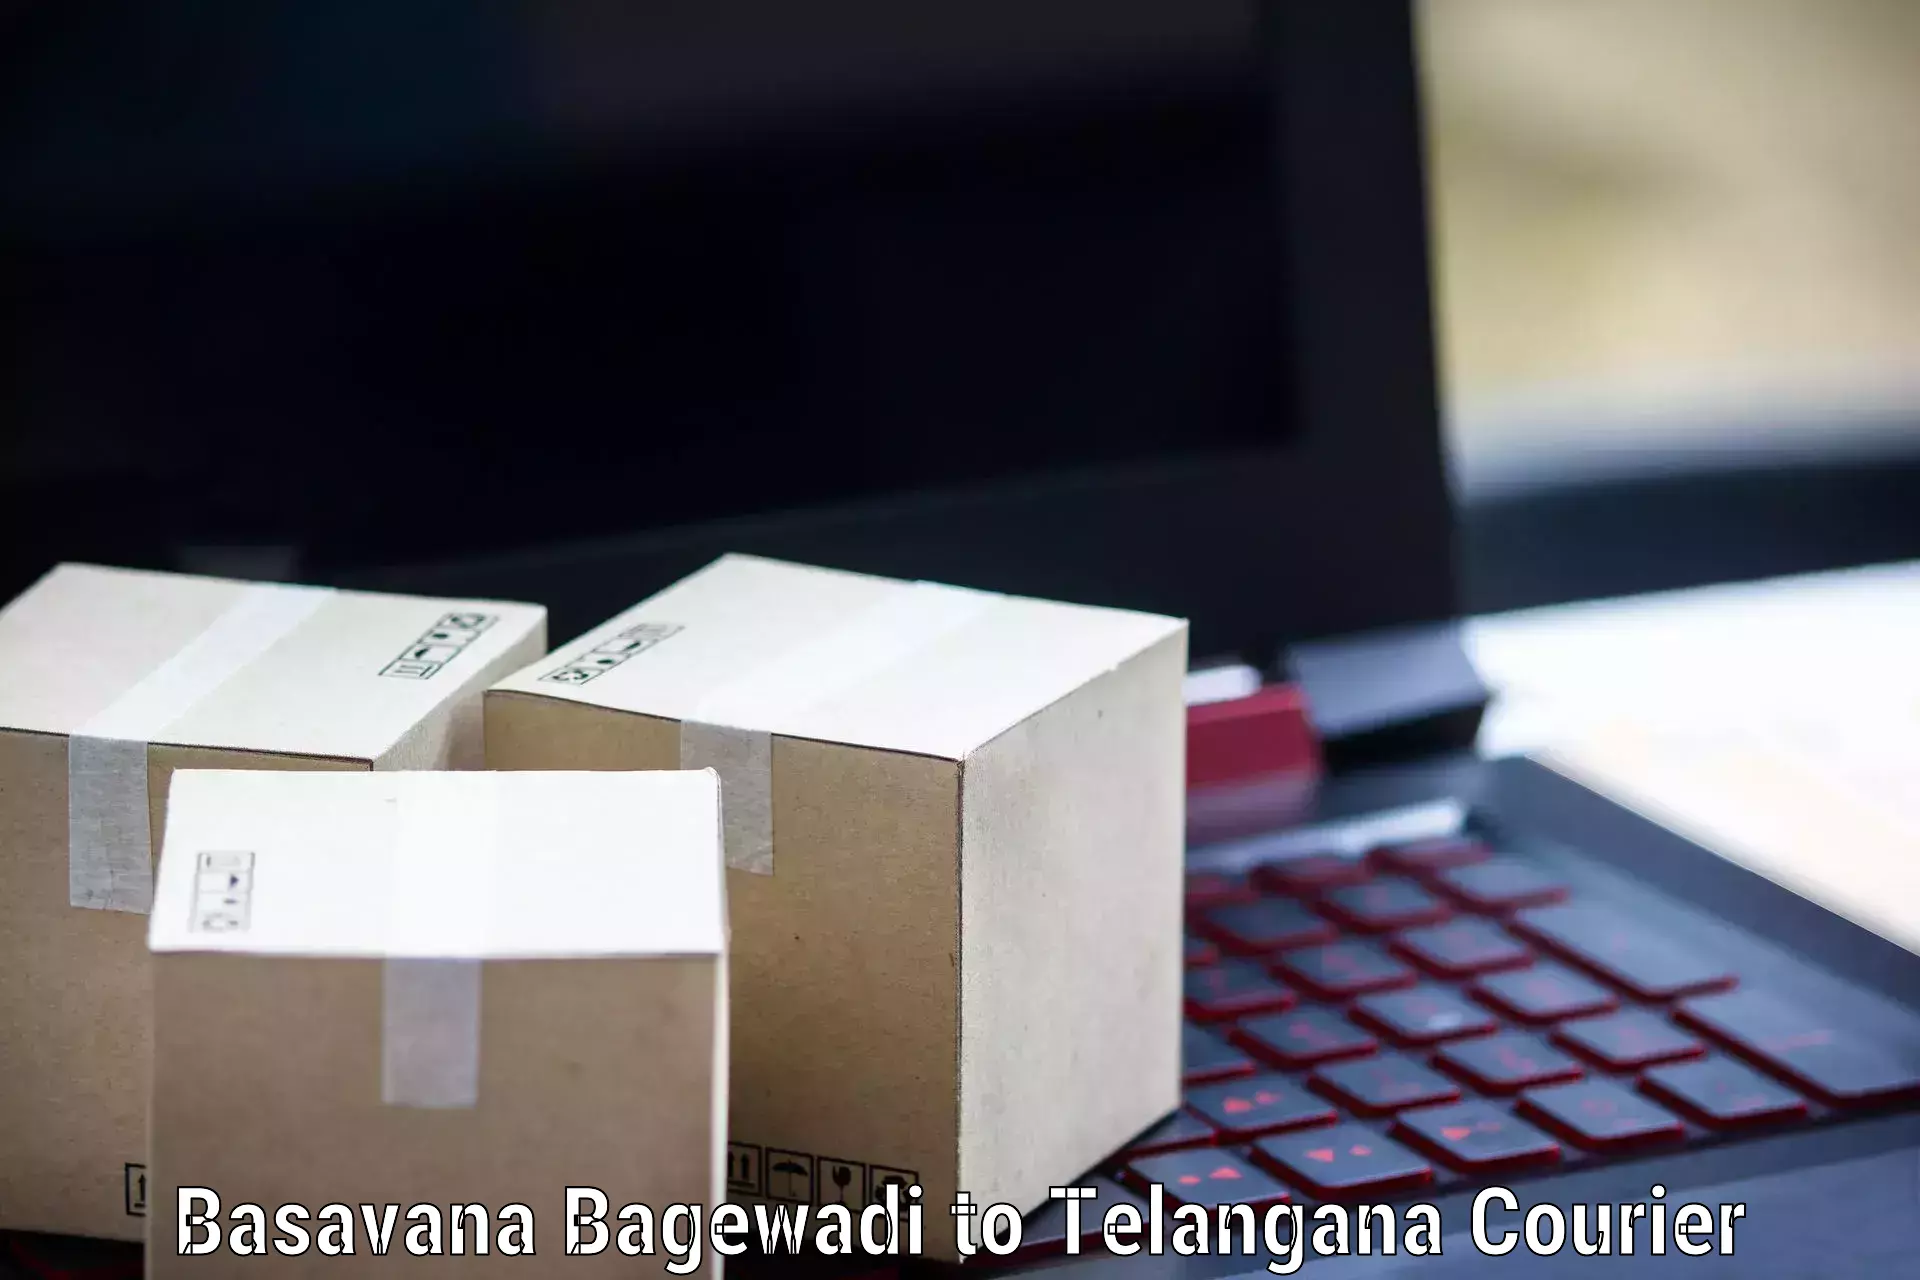 Modern courier technology Basavana Bagewadi to Armoor